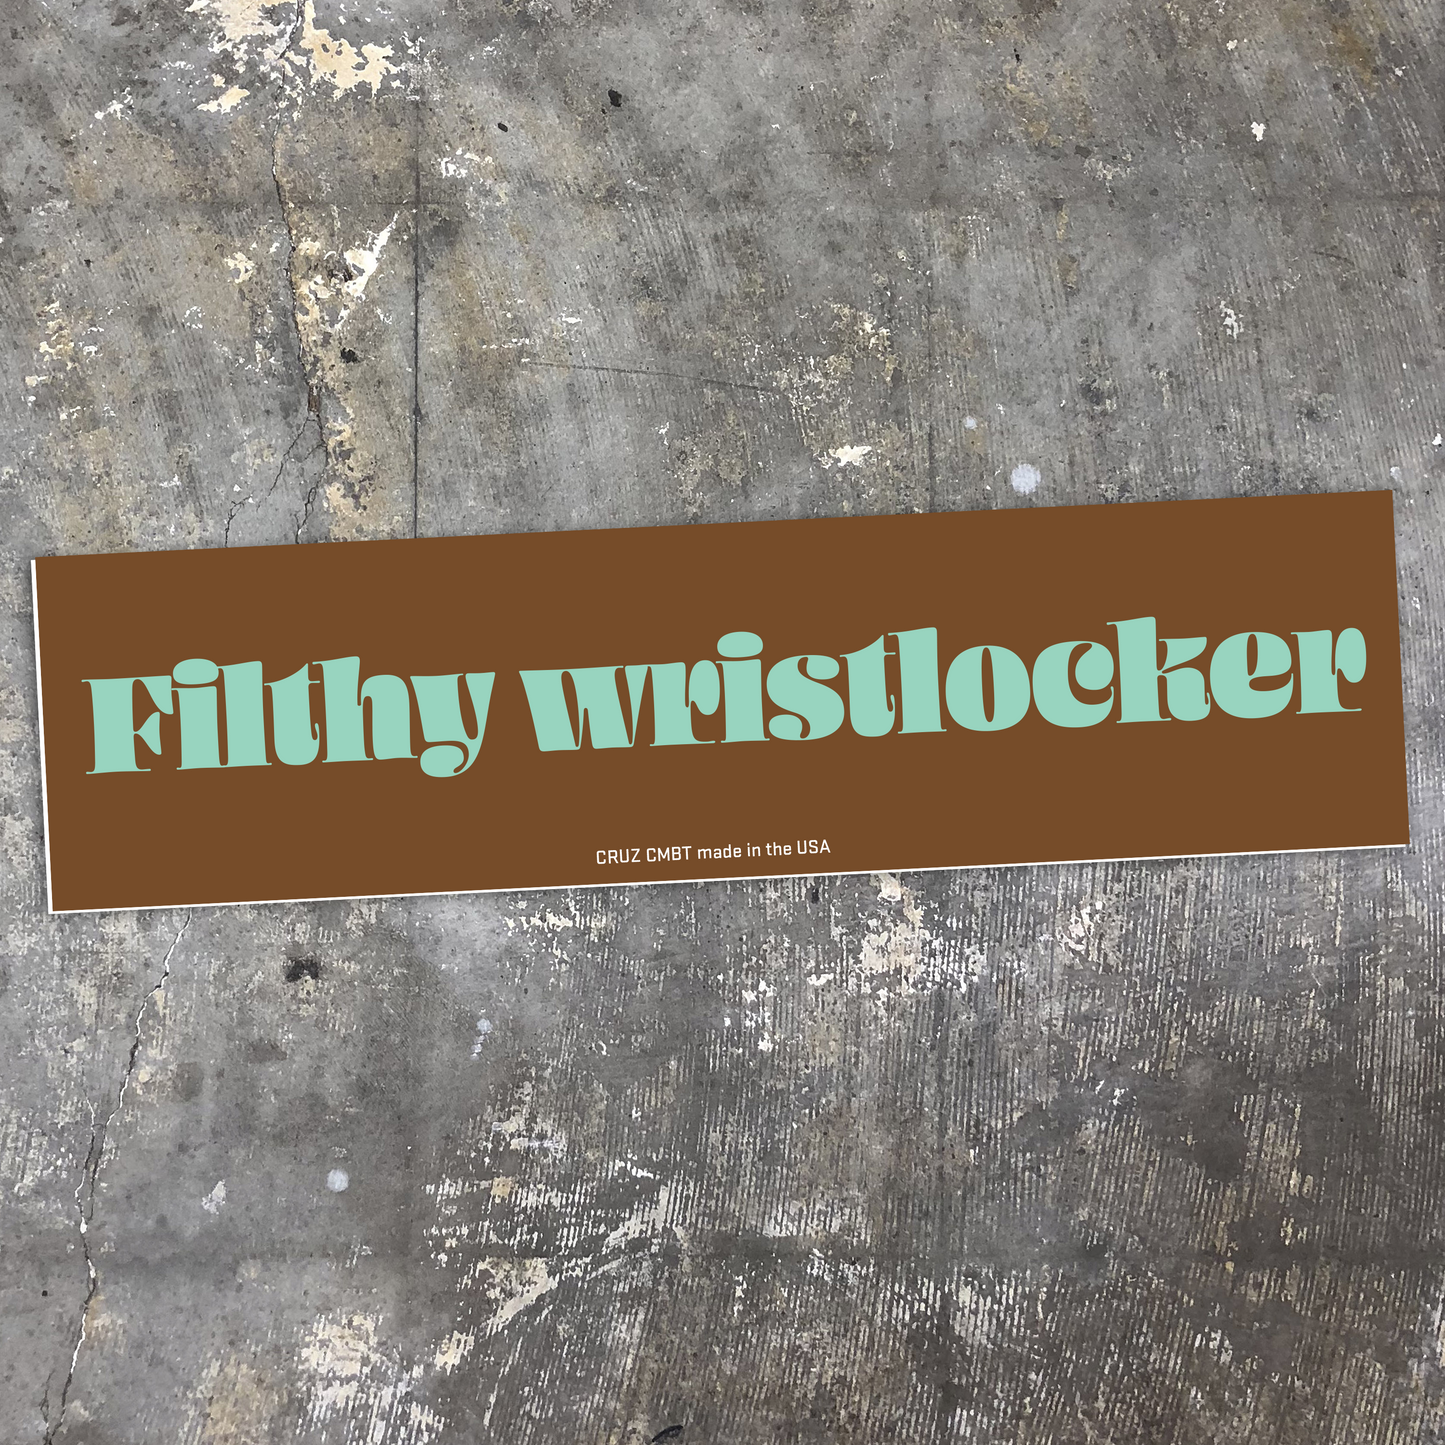 Filthy Wristlocker bumper sticker